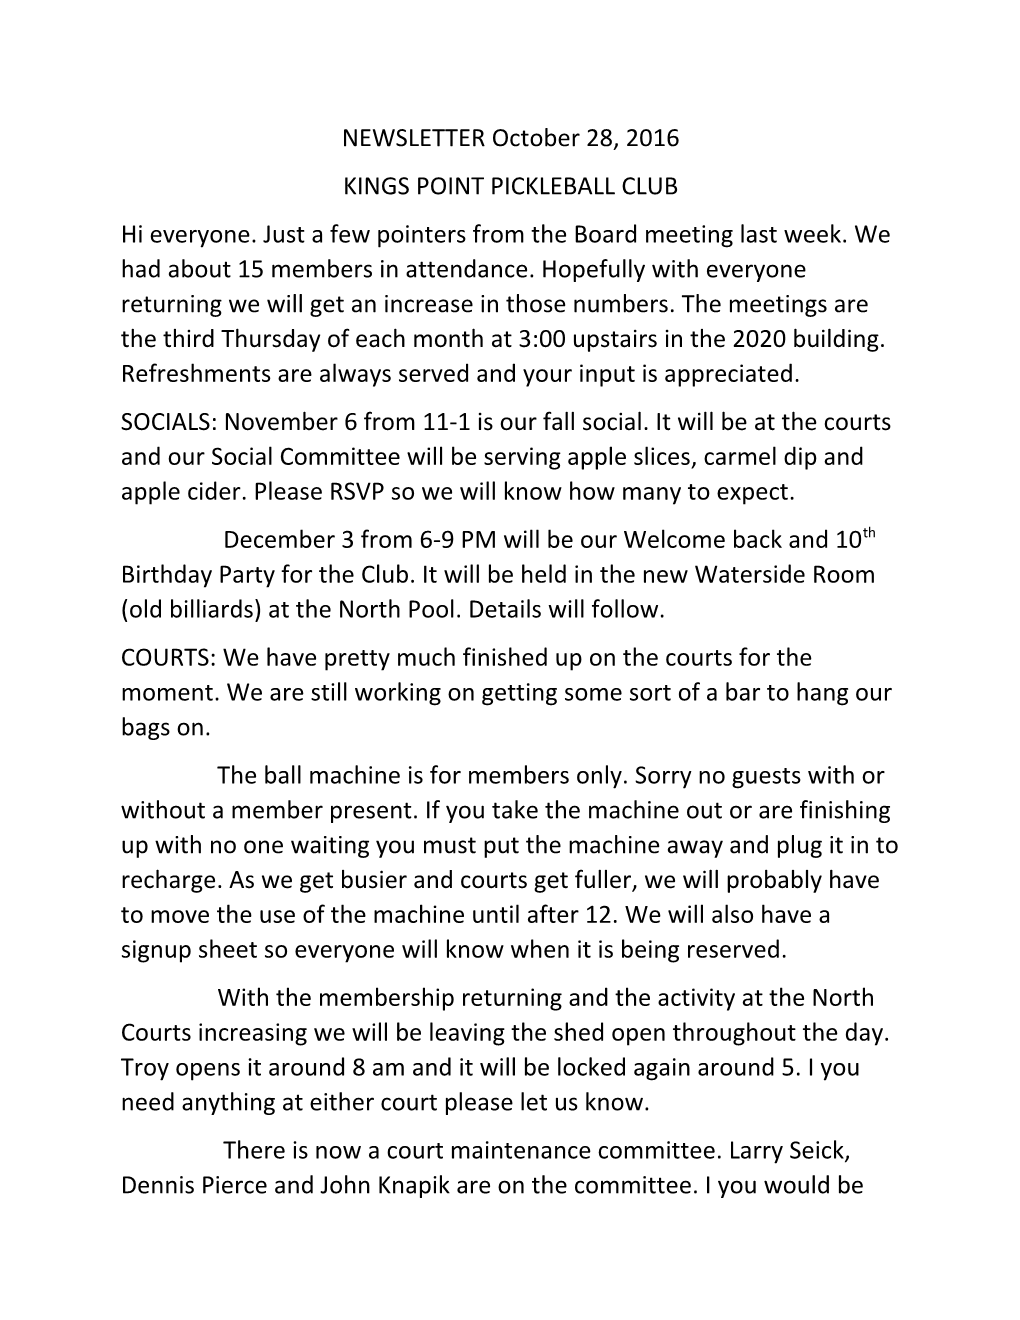 Kings Point Pickleball Club